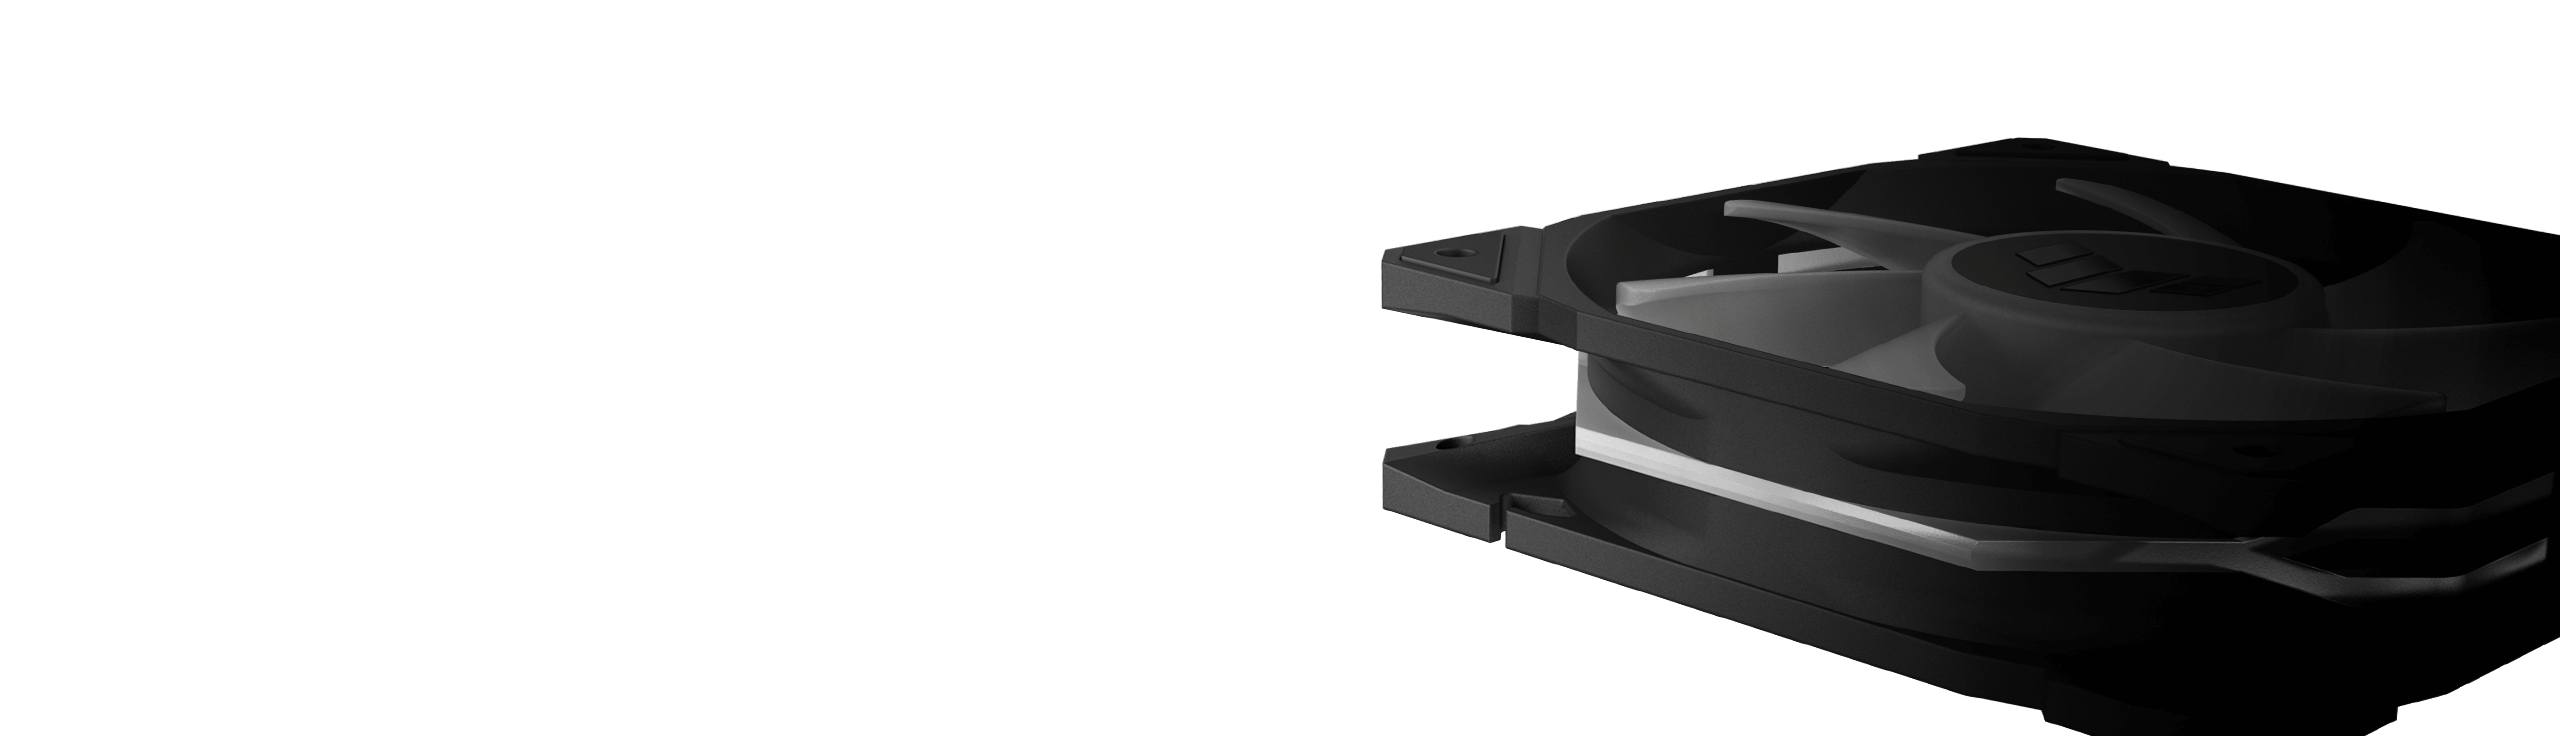 extra dik 28 mm ventilatorframe van de ASUS TUF Gaming TR120 ARGB ventilator vergeleken met ander 25 mm ventilatorframe